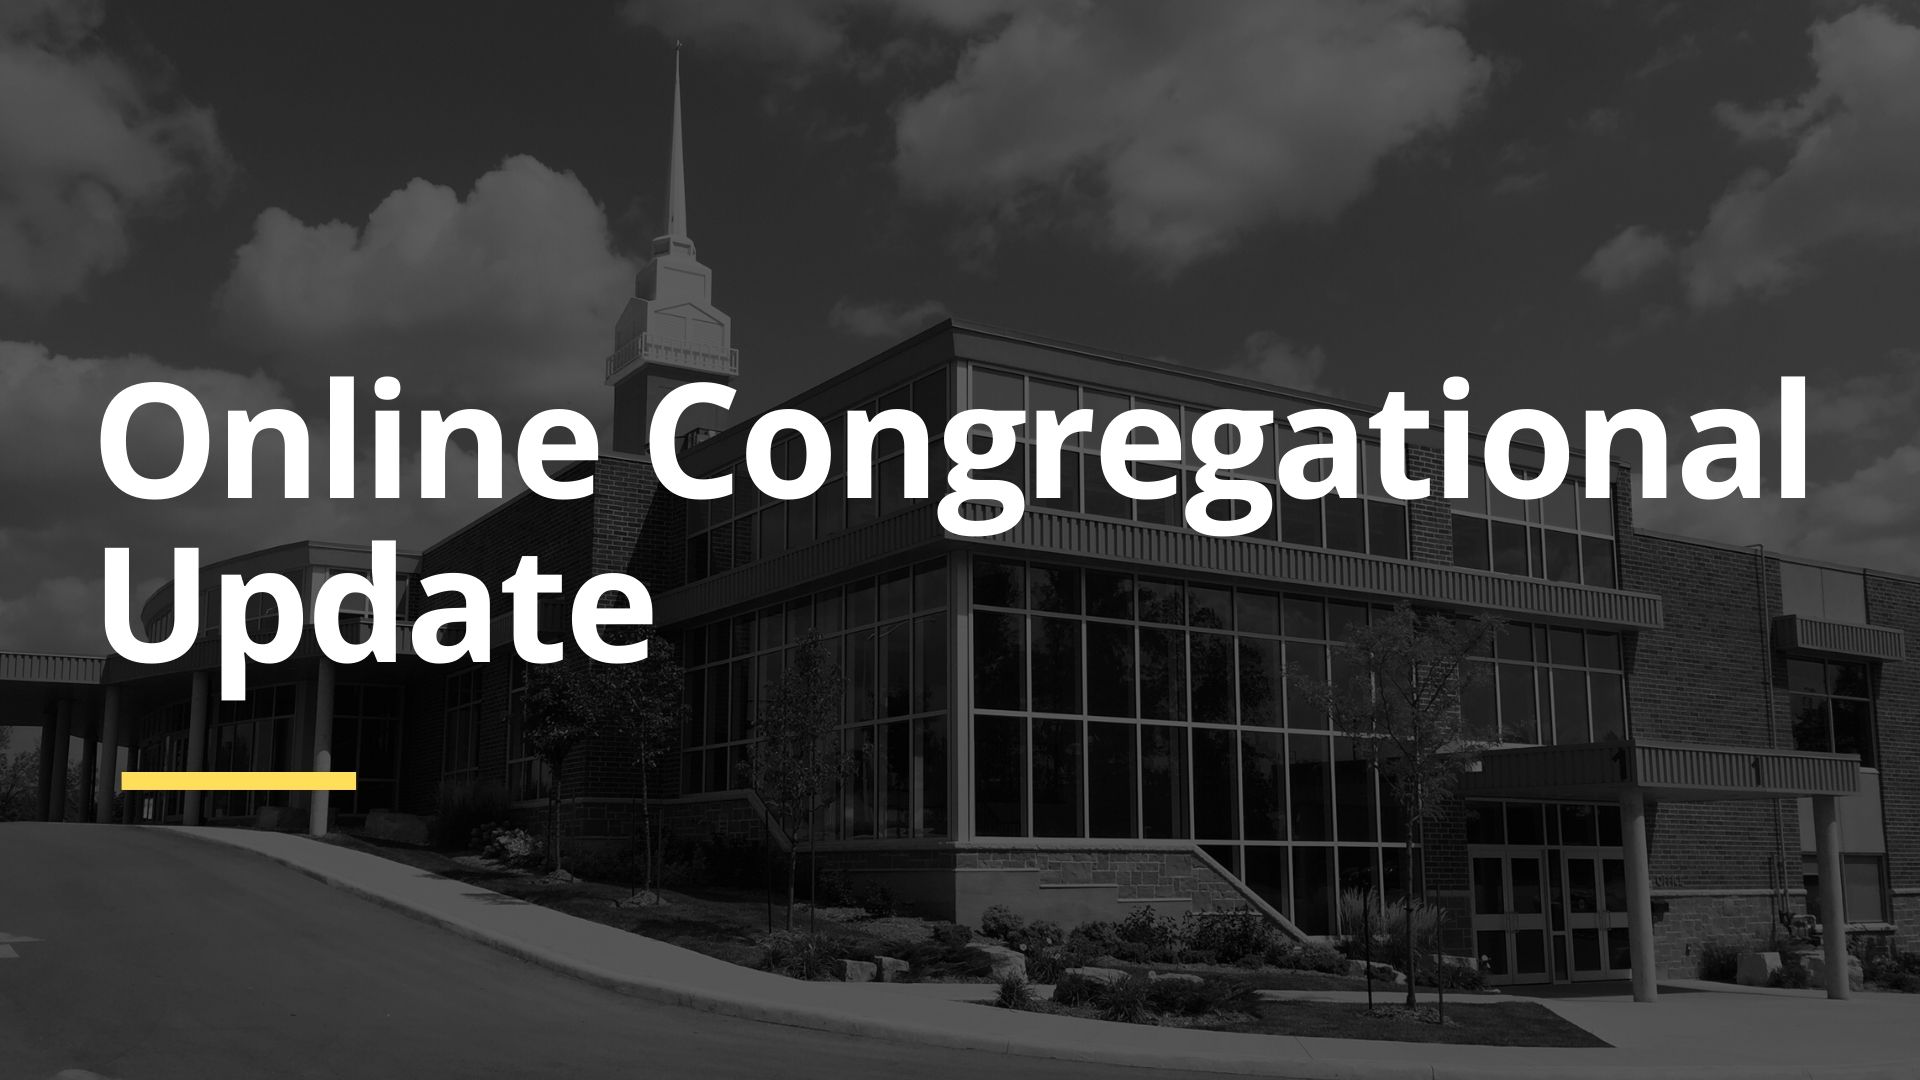 Online Congregational Update 2 image